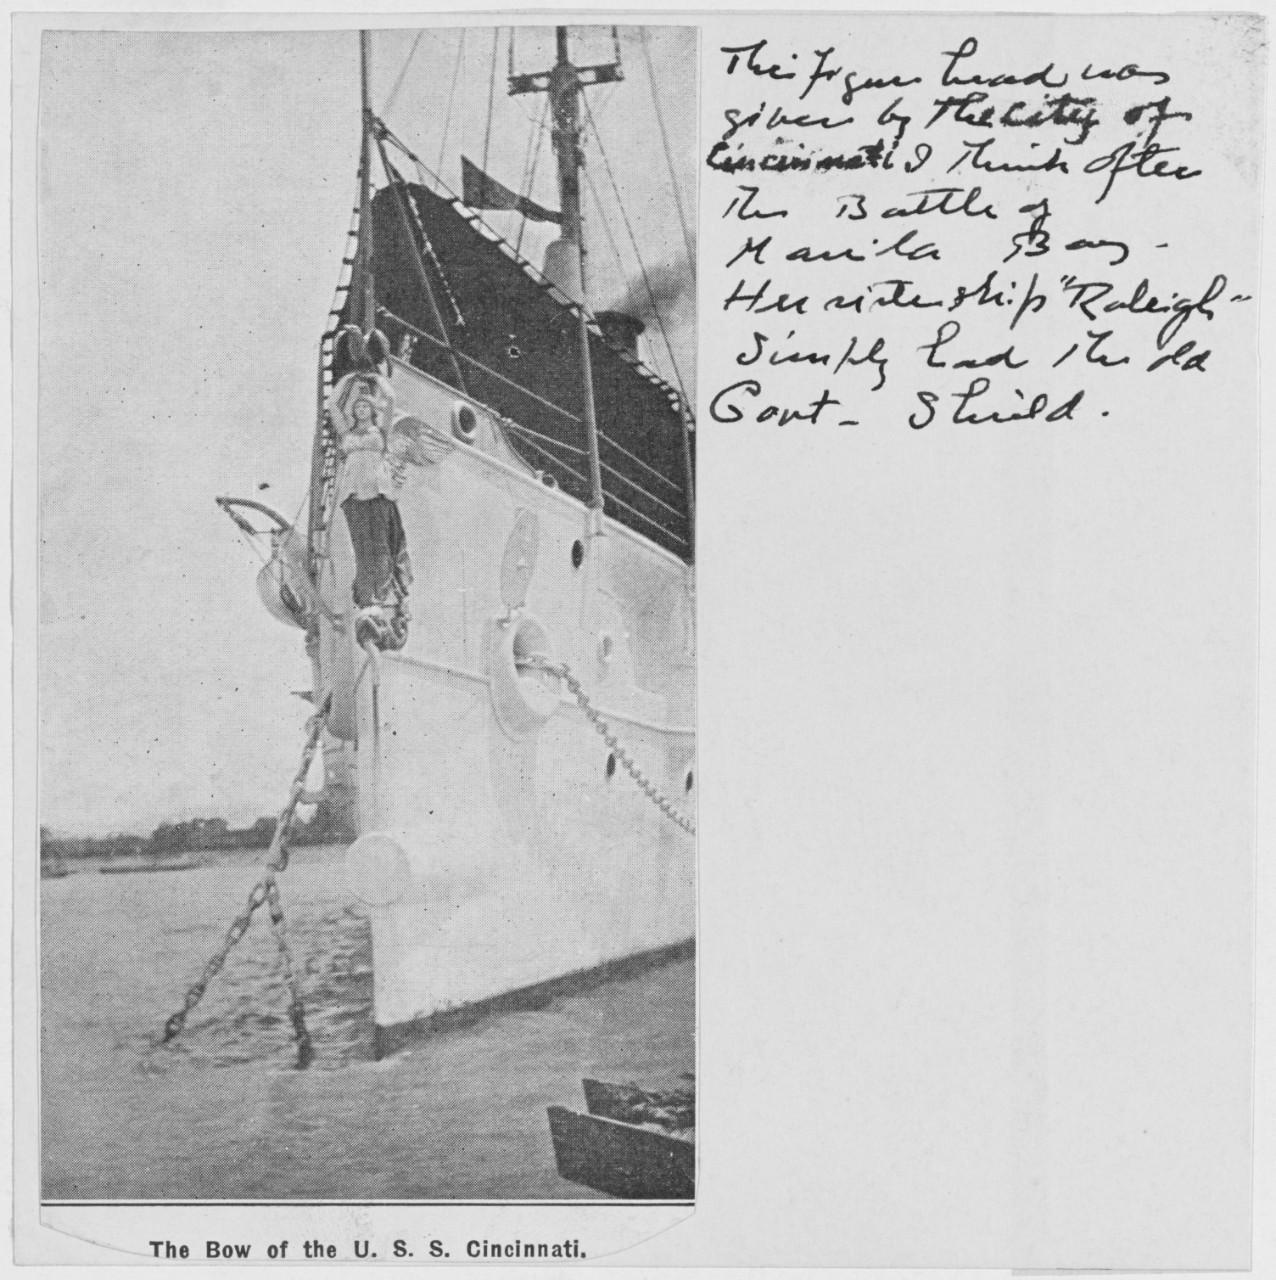 The bow of the USS CINCINNATI.